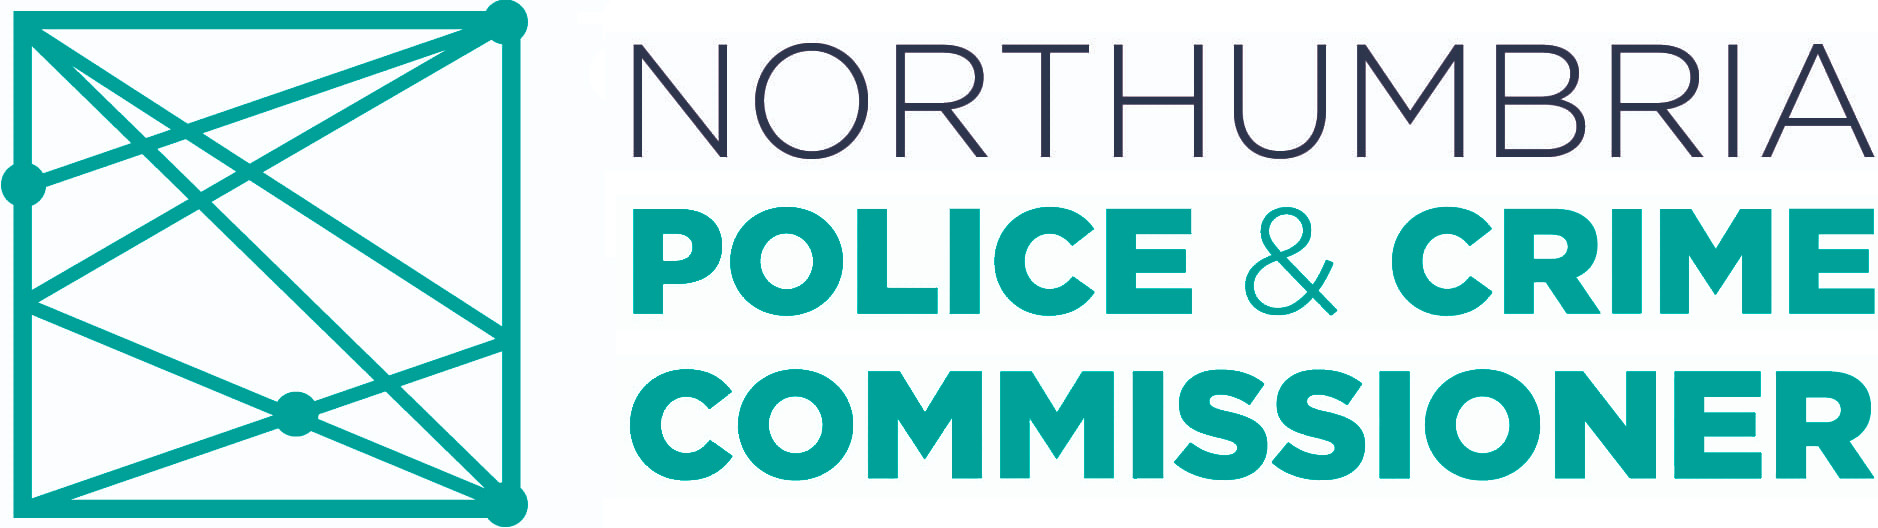 Northumbria Police & Crime Commissioner